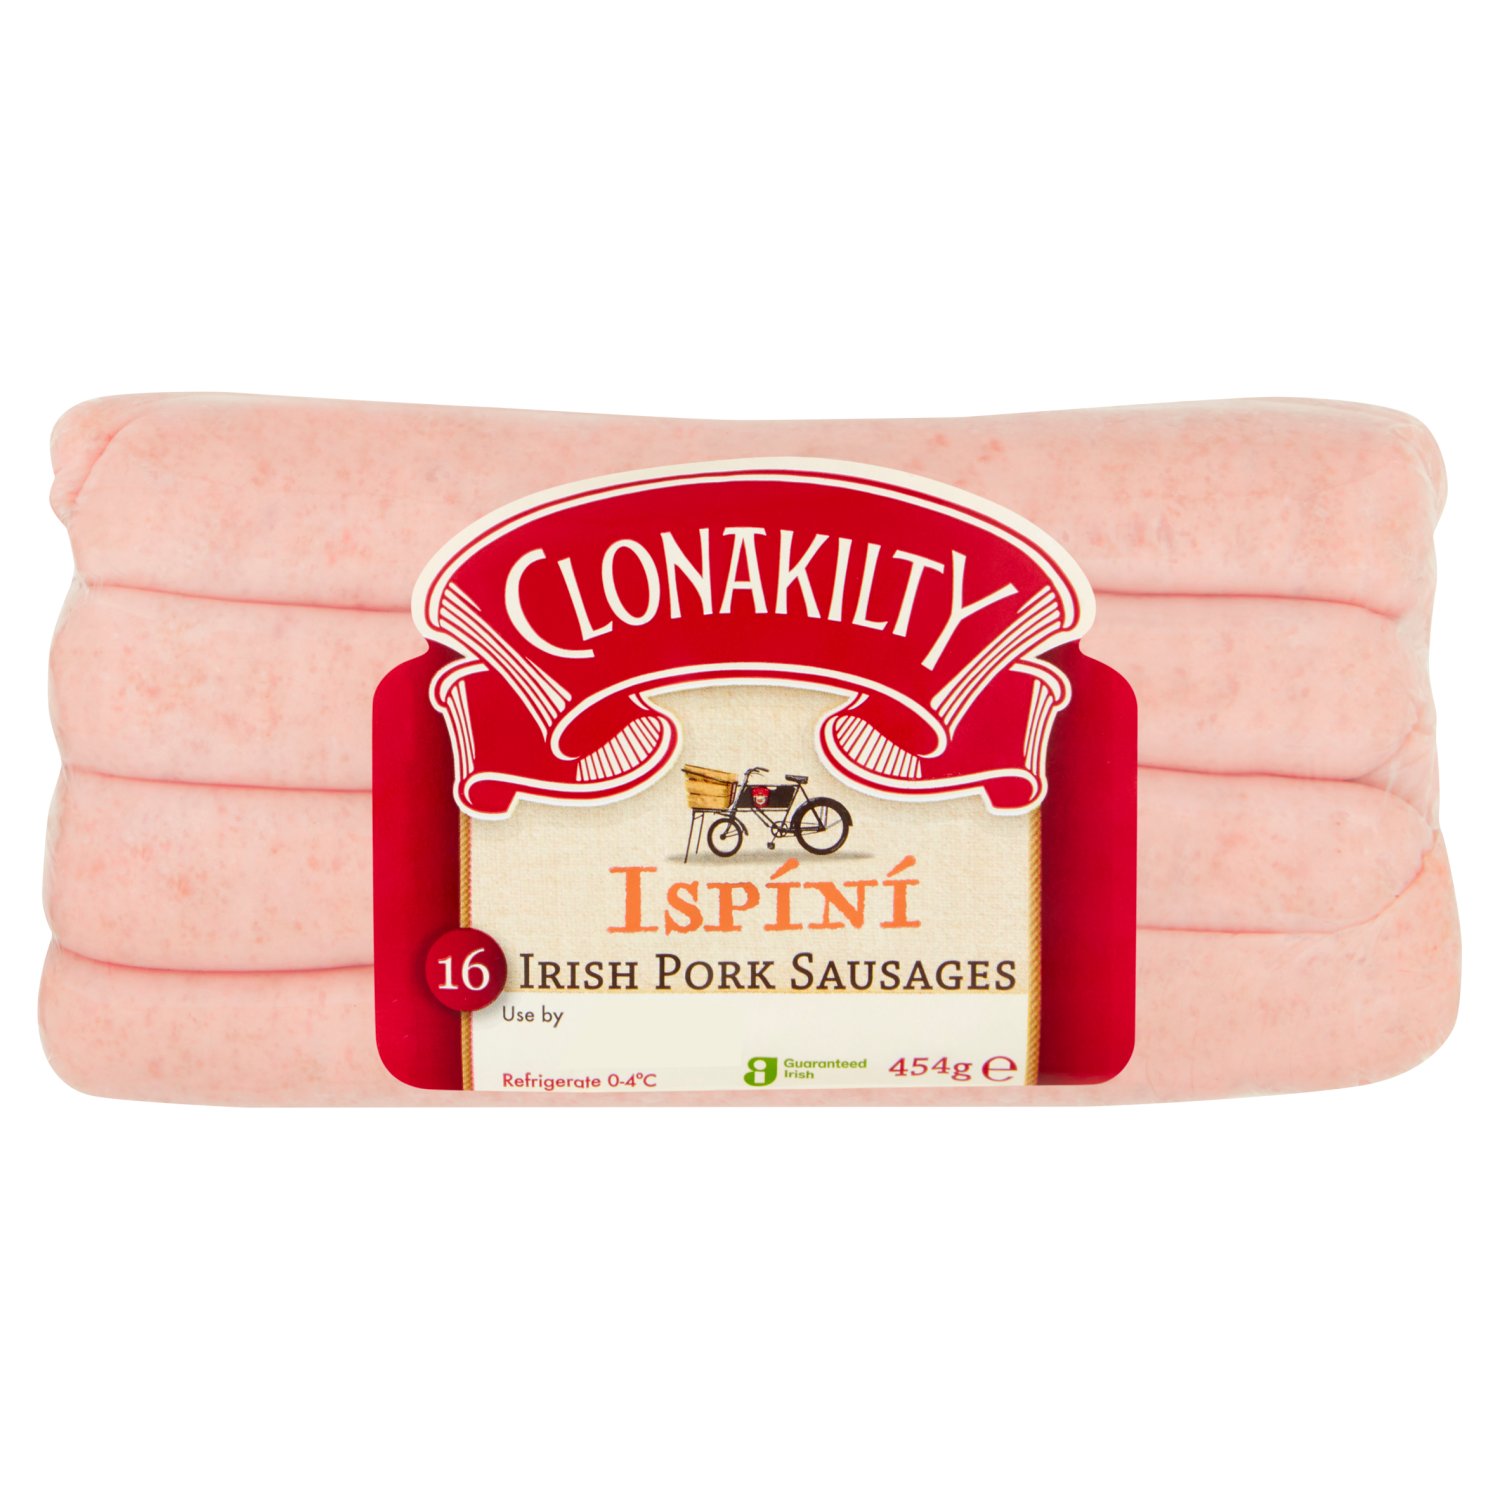 Clonakilty Irish Pork Sausages 16 Pack (454 g)